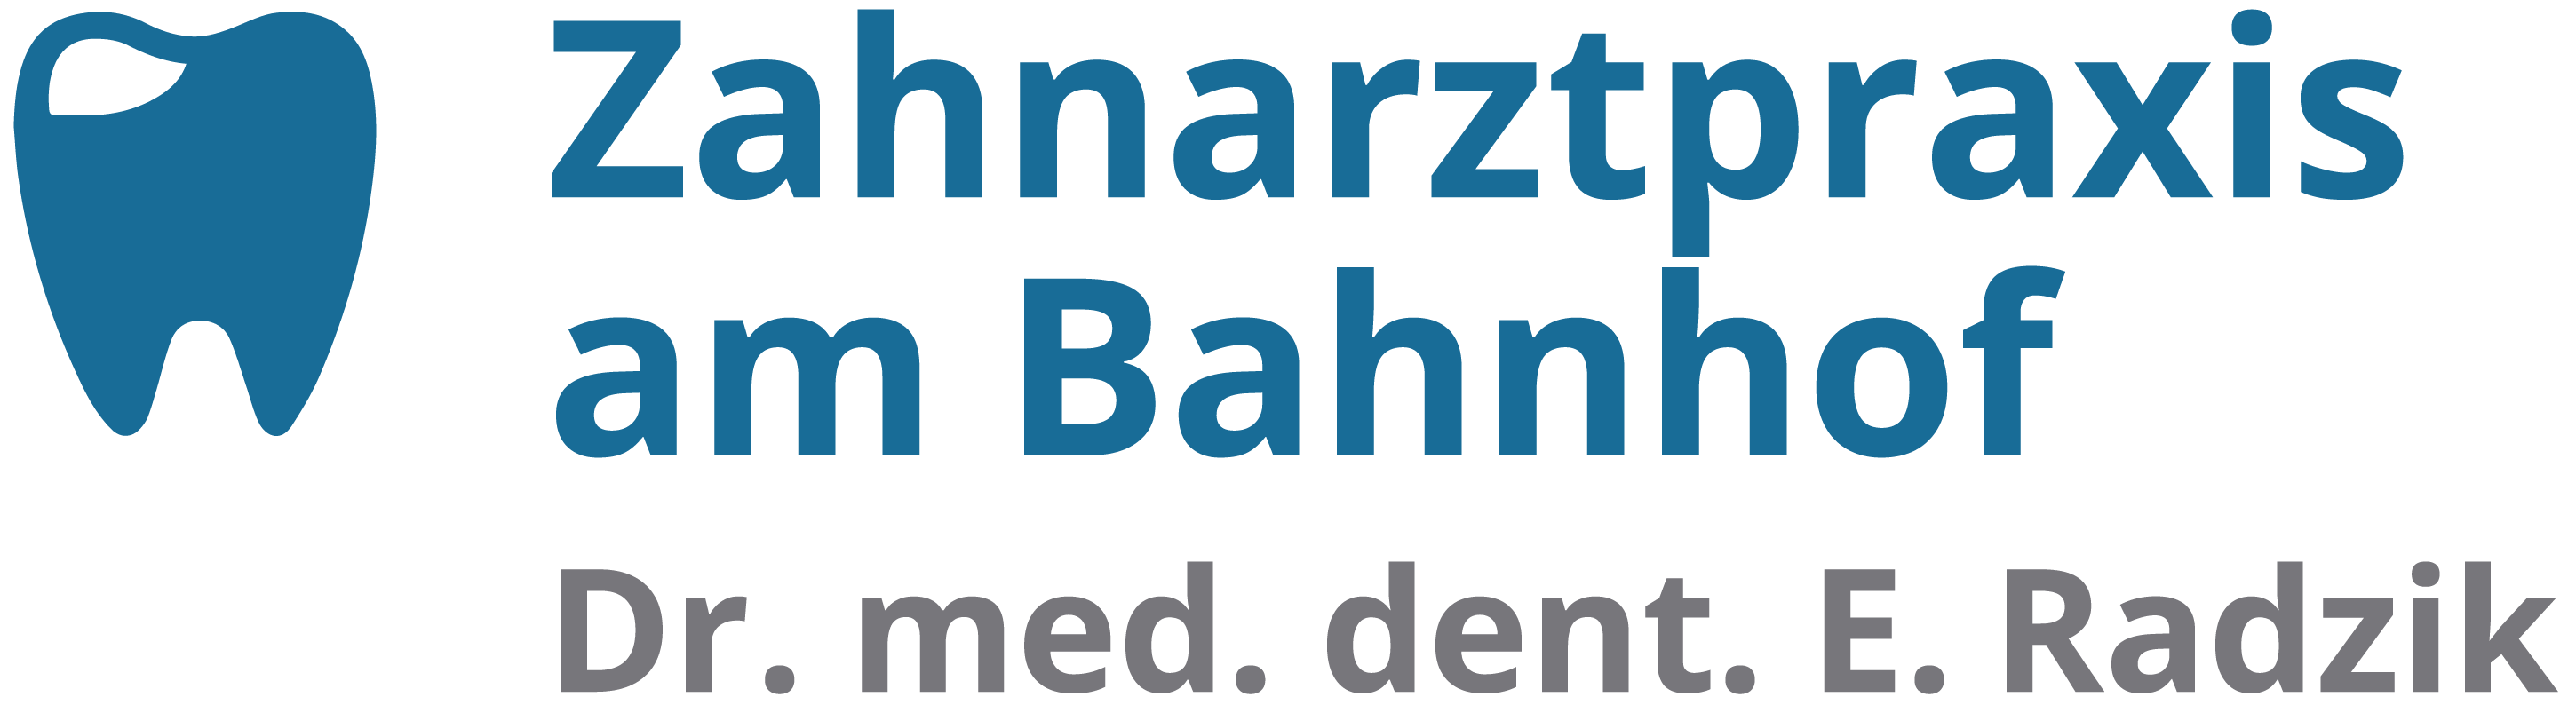 Zahnarztpraxis am Bahnhof - rad-mann GmbH